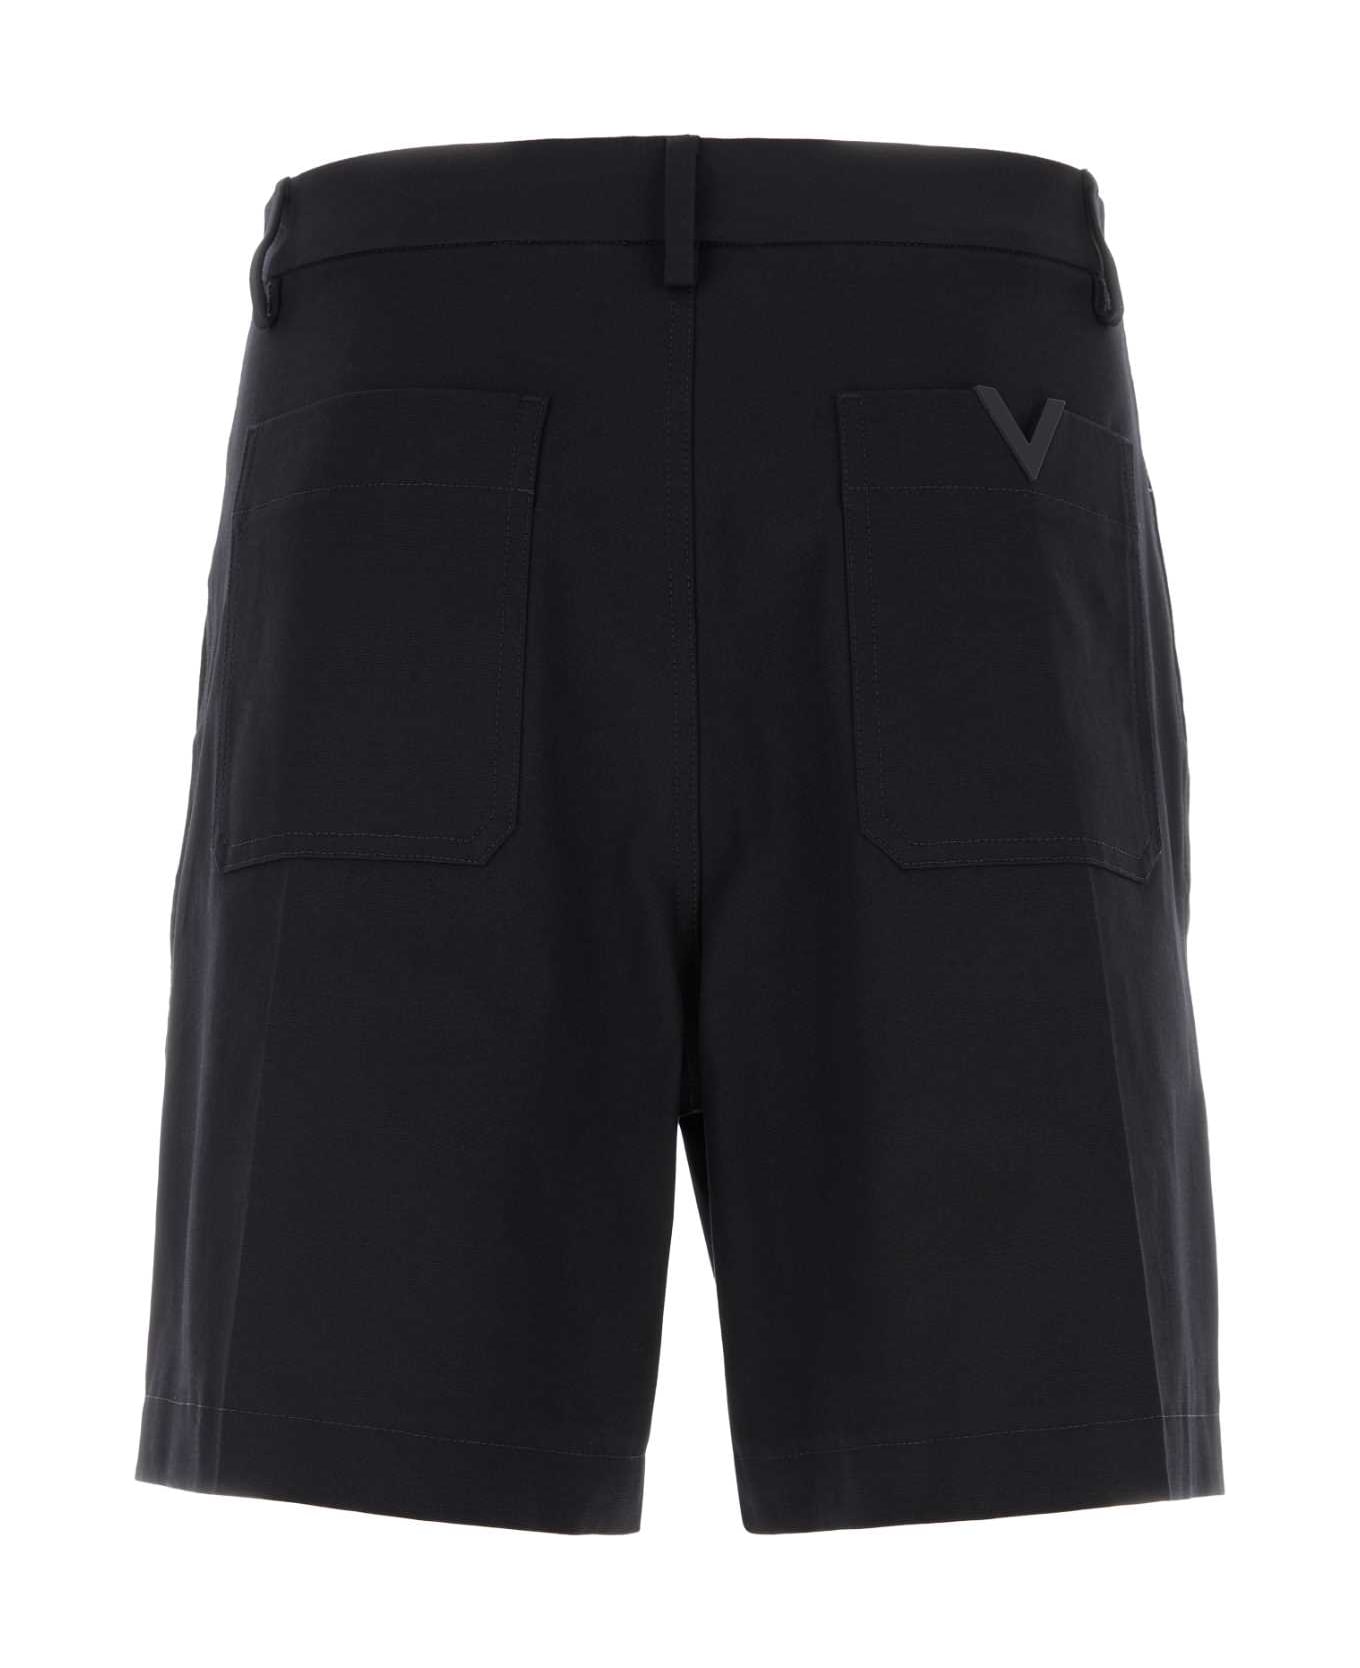 Valentino Garavani Midnight Blue Stretch Cotton Bermuda Shorts - NAVY